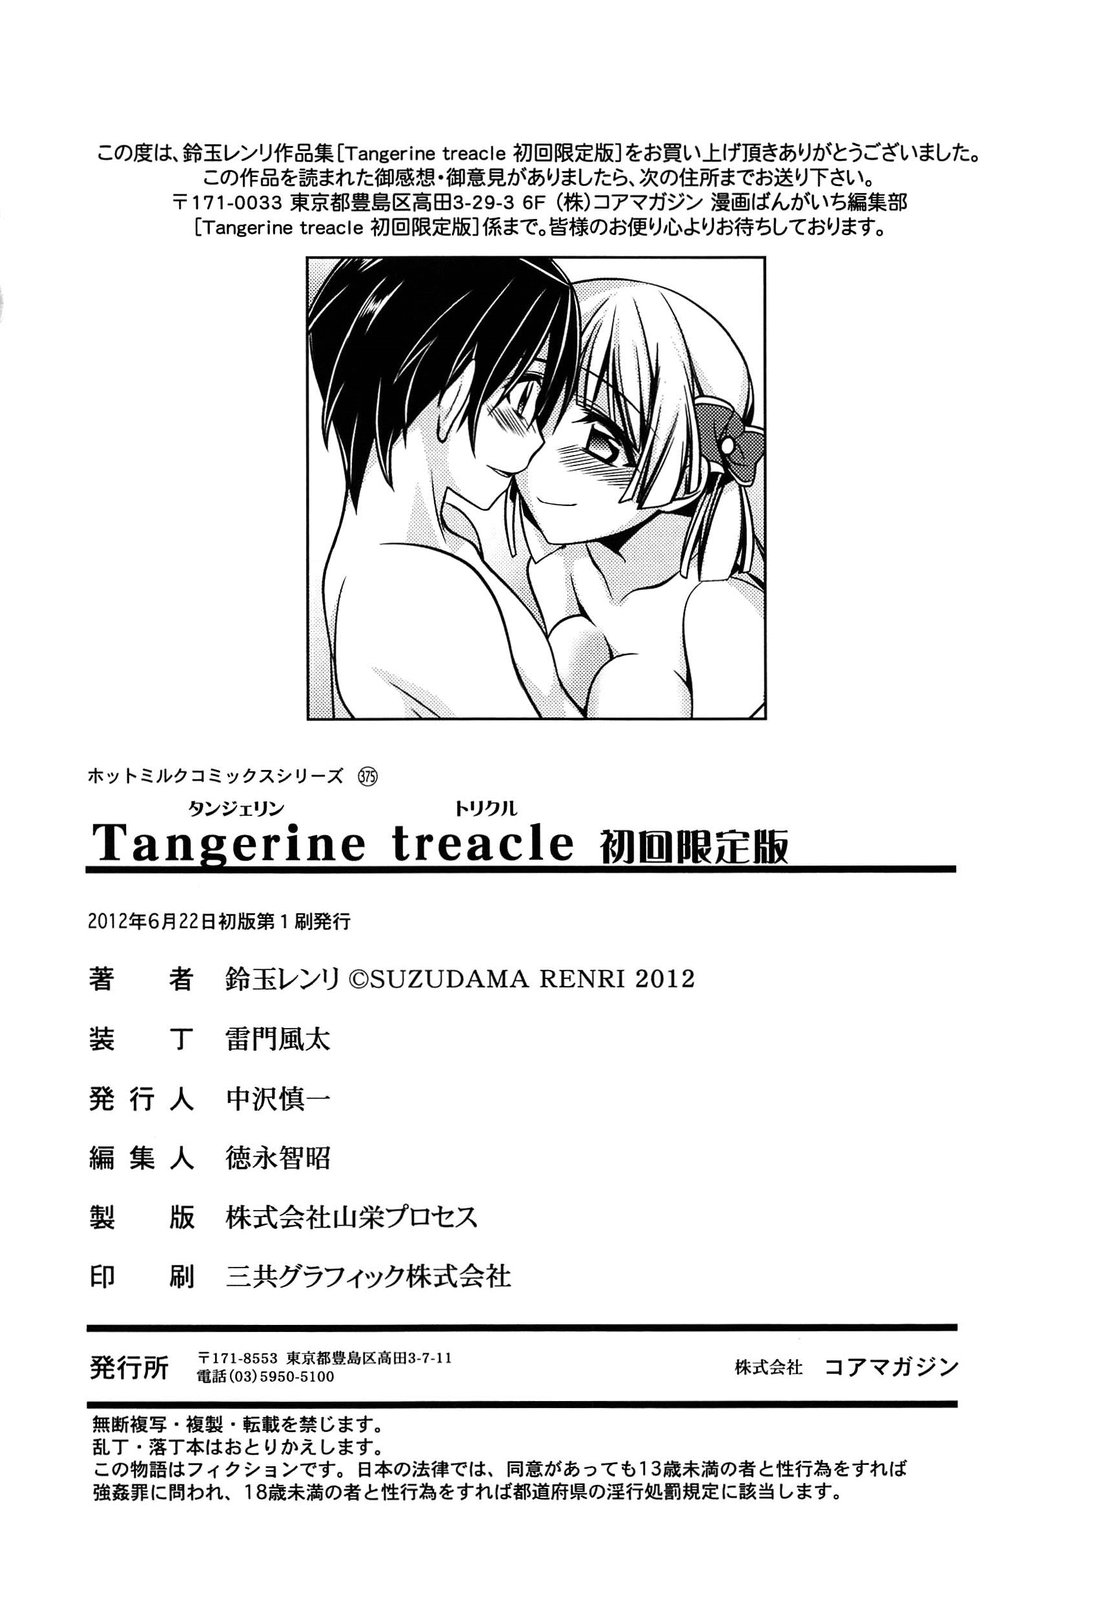 [Suzudama Renri] Tangerine treacle [鈴玉レンリ] Tangerine treacle